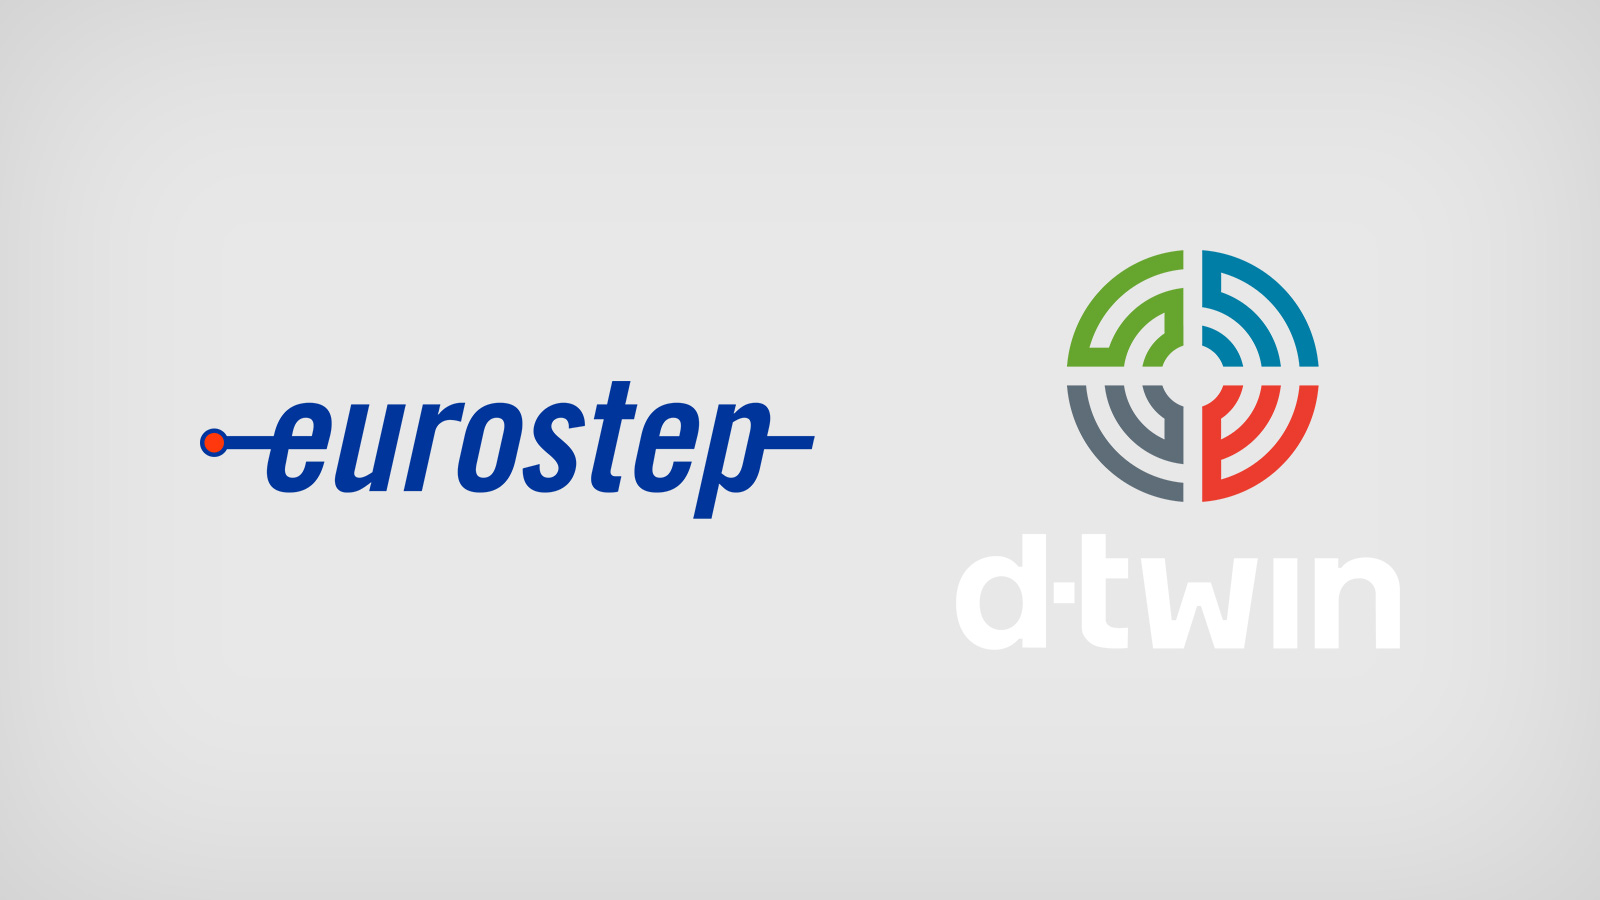 Eurostep and d-twin logos